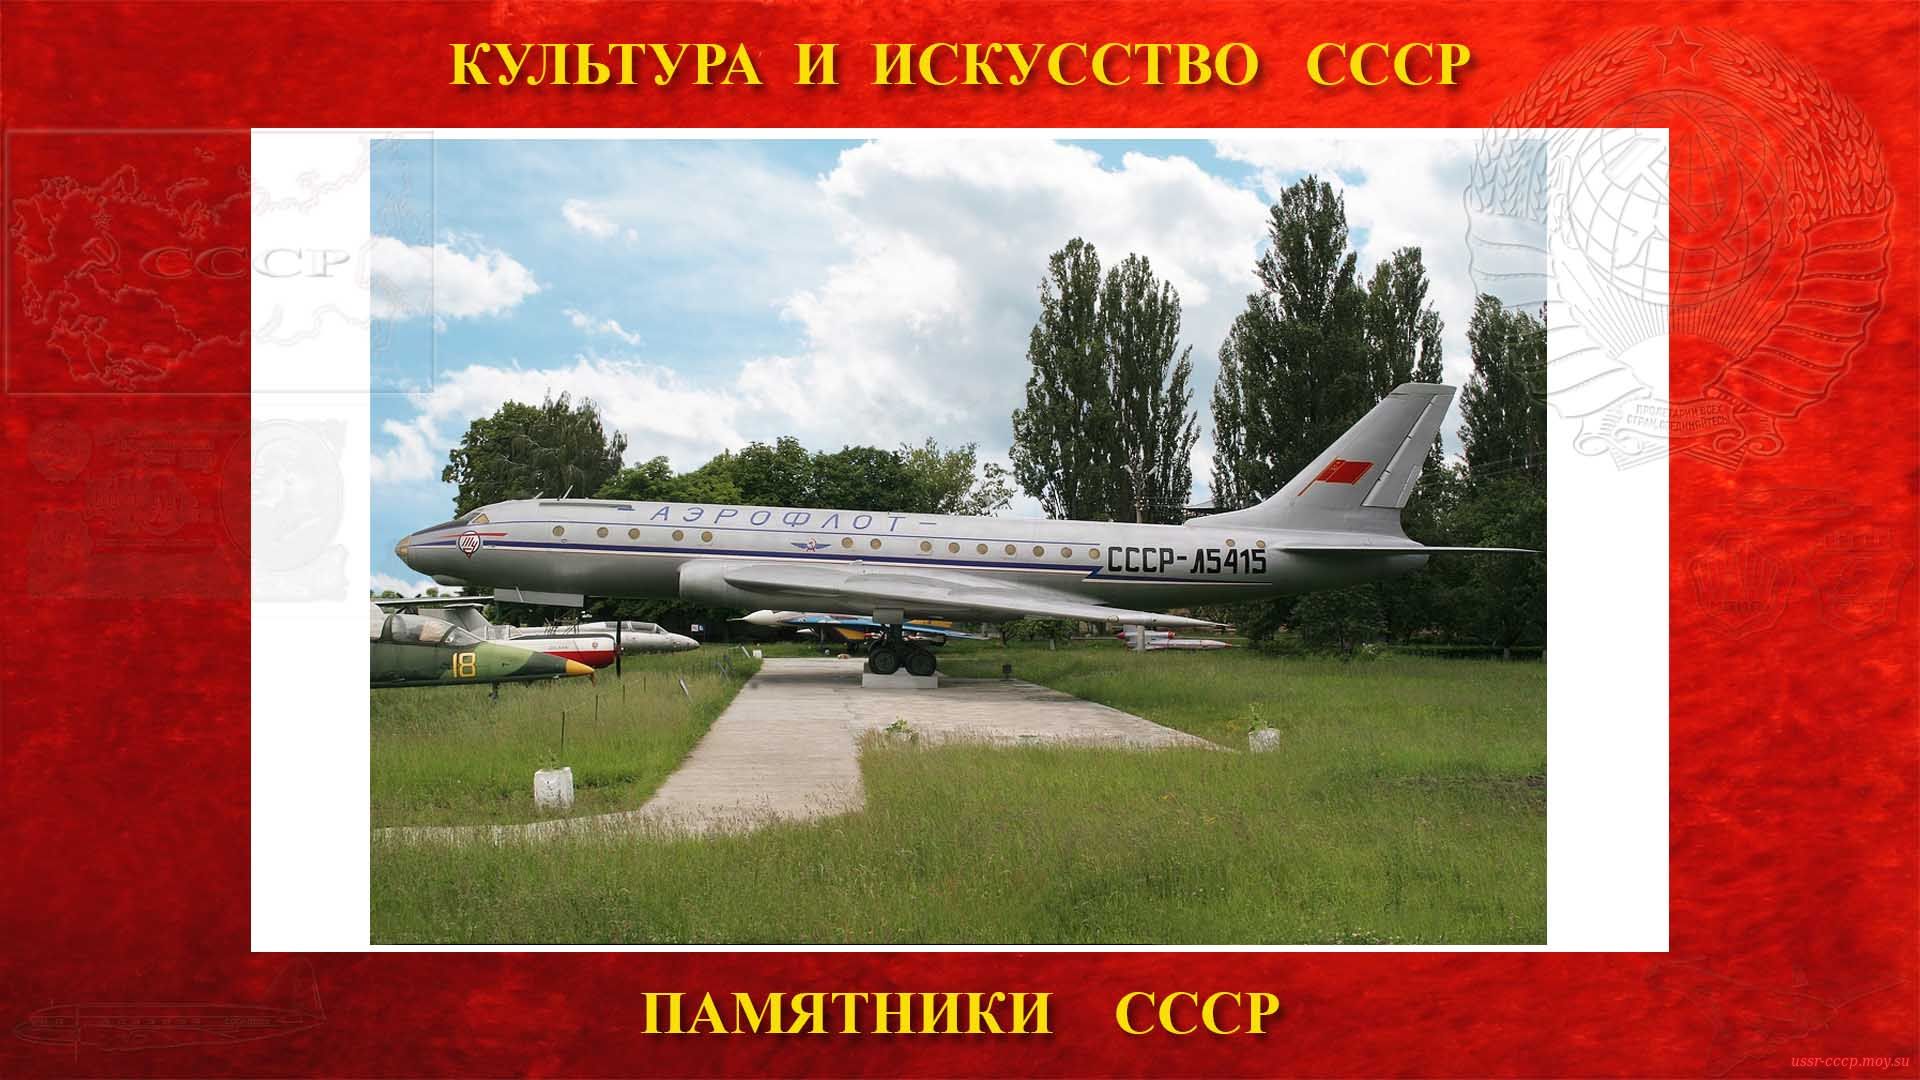 Памятник — Самолёт Ту-104 СССР-Л5415 — Аэропорт Жуляны (Киев)